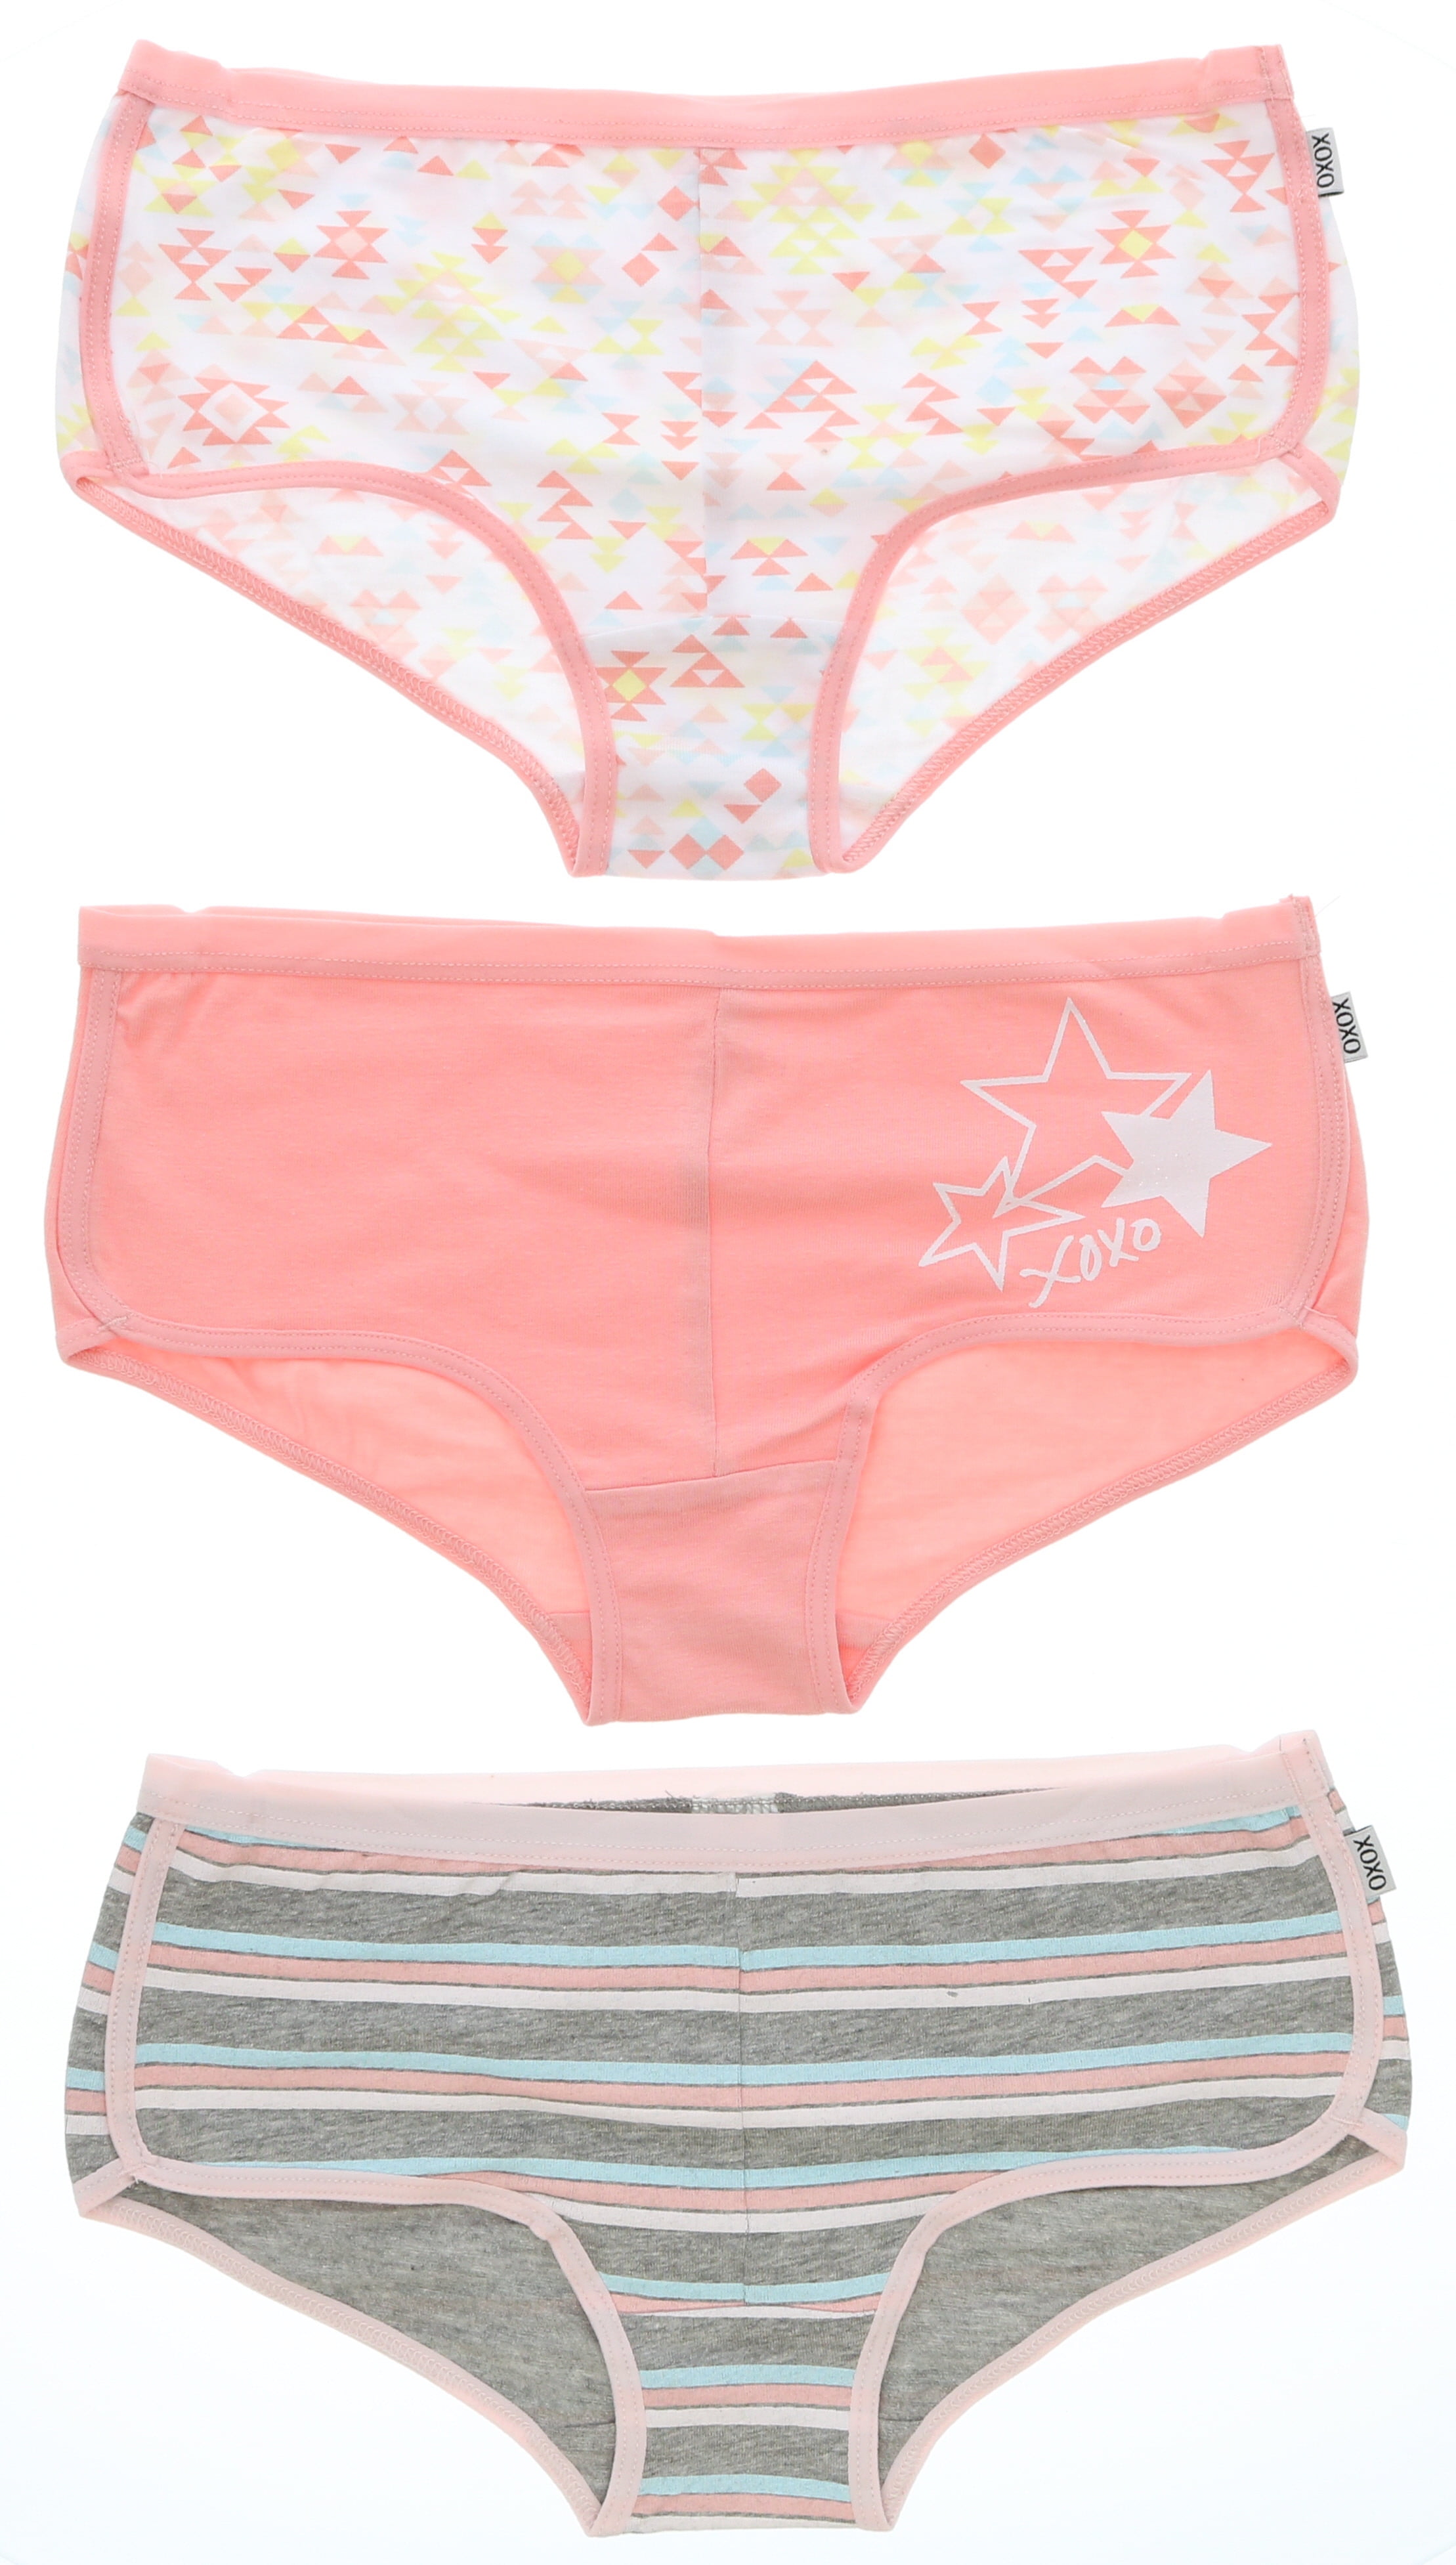 XOXO Girl's Cotton Panties 6 Pack - Maroon & Pink Superstar - Large 10/15